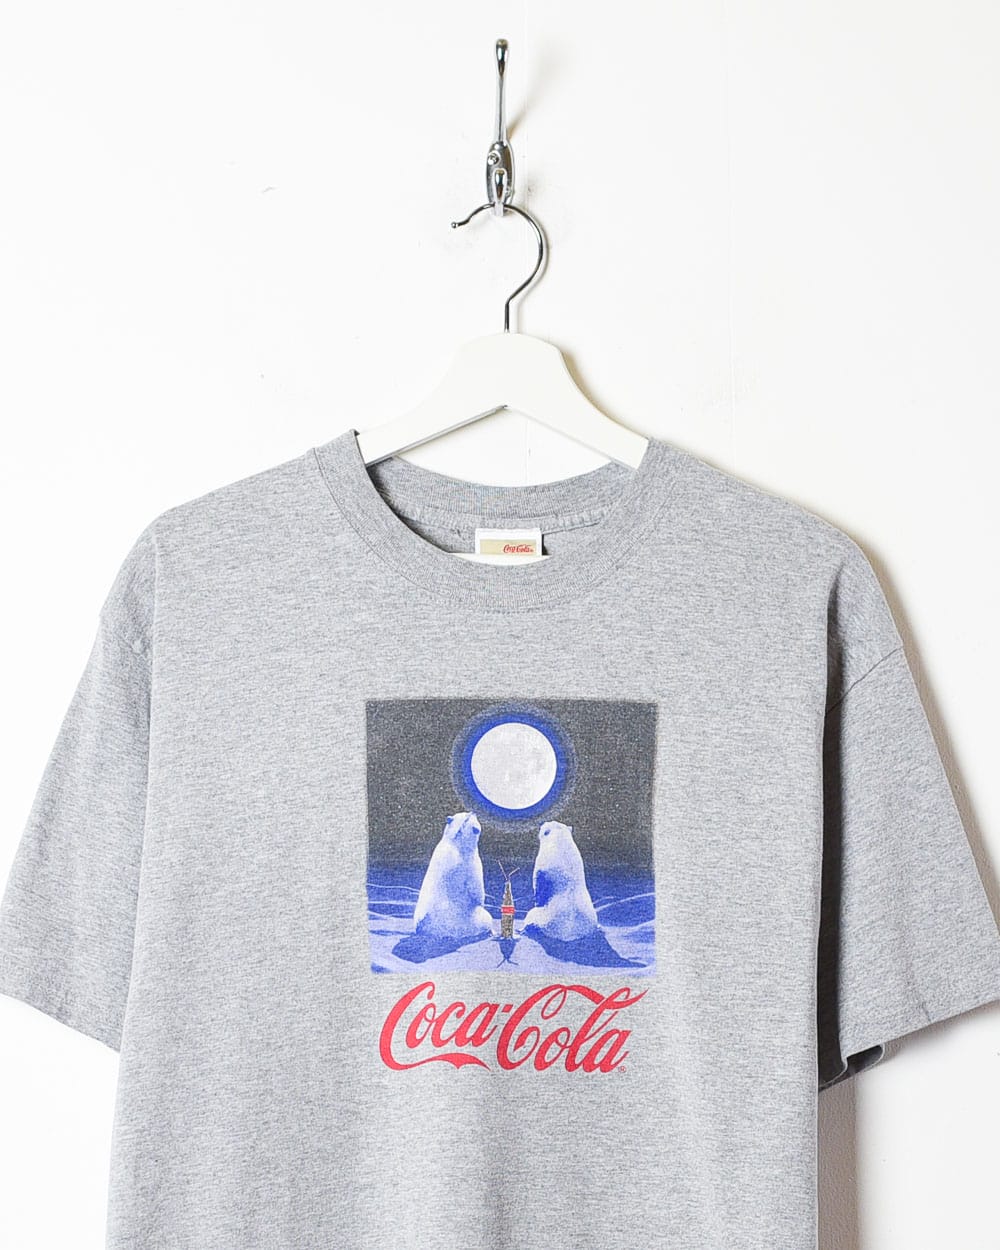 Stone Coca Cola T-Shirt - Large